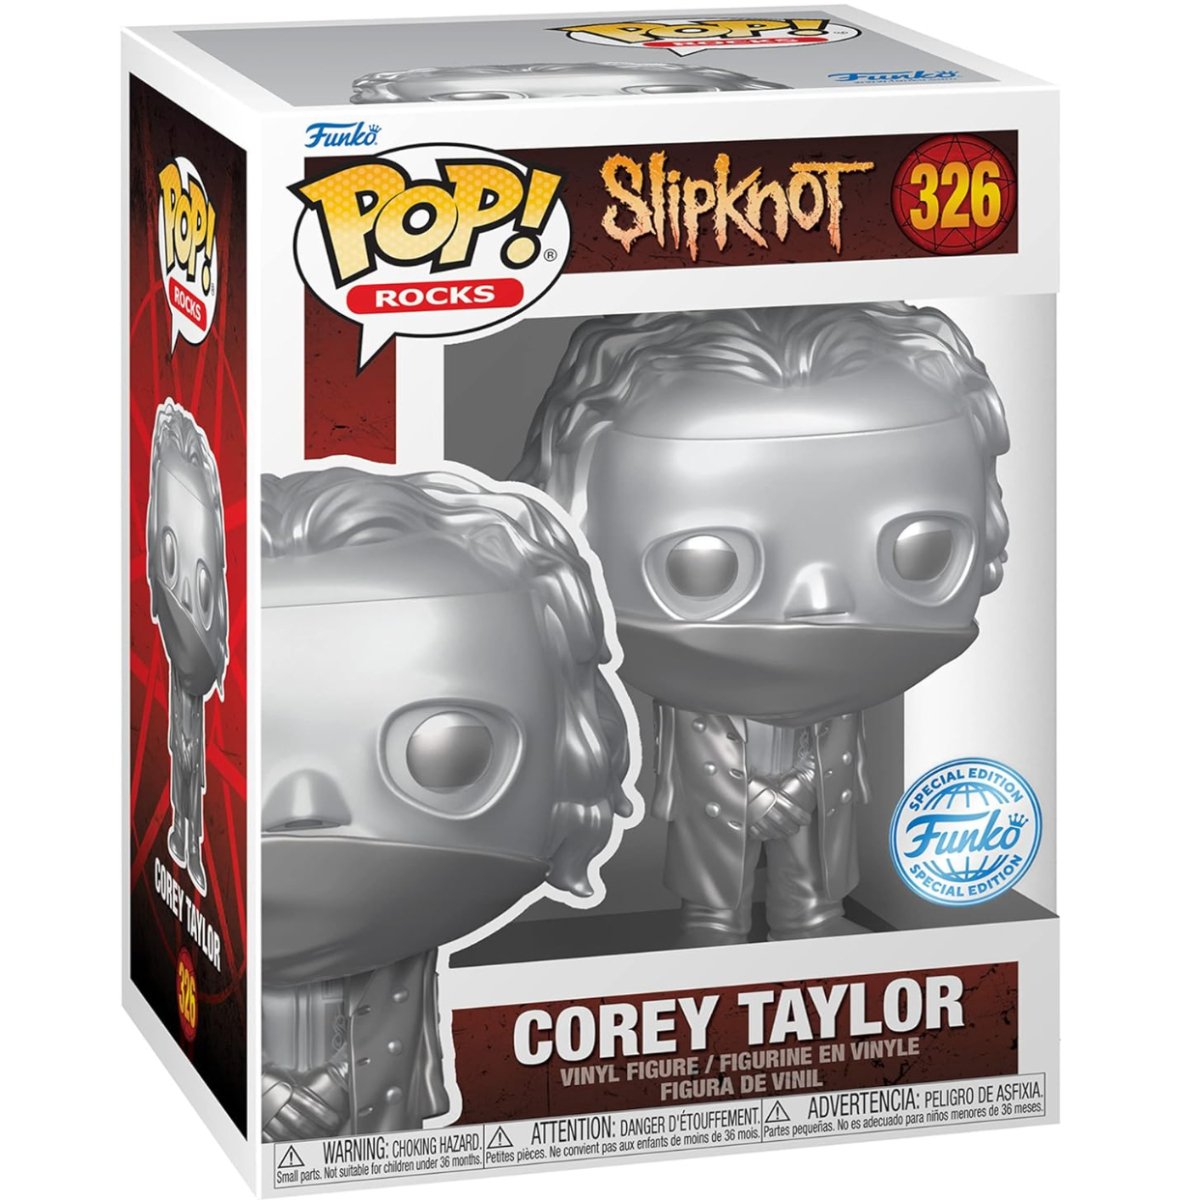 Slipknot - Corey Taylor [Platinum] (Special Edition) #326 - Funko Pop! Vinyl Rocks - Persona Toys